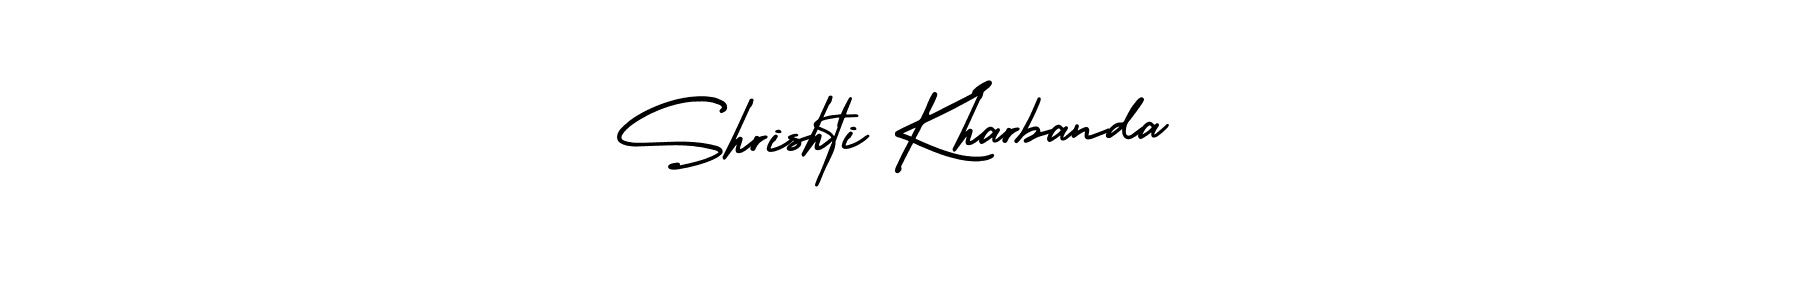 Use a signature maker to create a handwritten signature online. With this signature software, you can design (AmerikaSignatureDemo-Regular) your own signature for name Shrishti Kharbanda. Shrishti Kharbanda signature style 3 images and pictures png